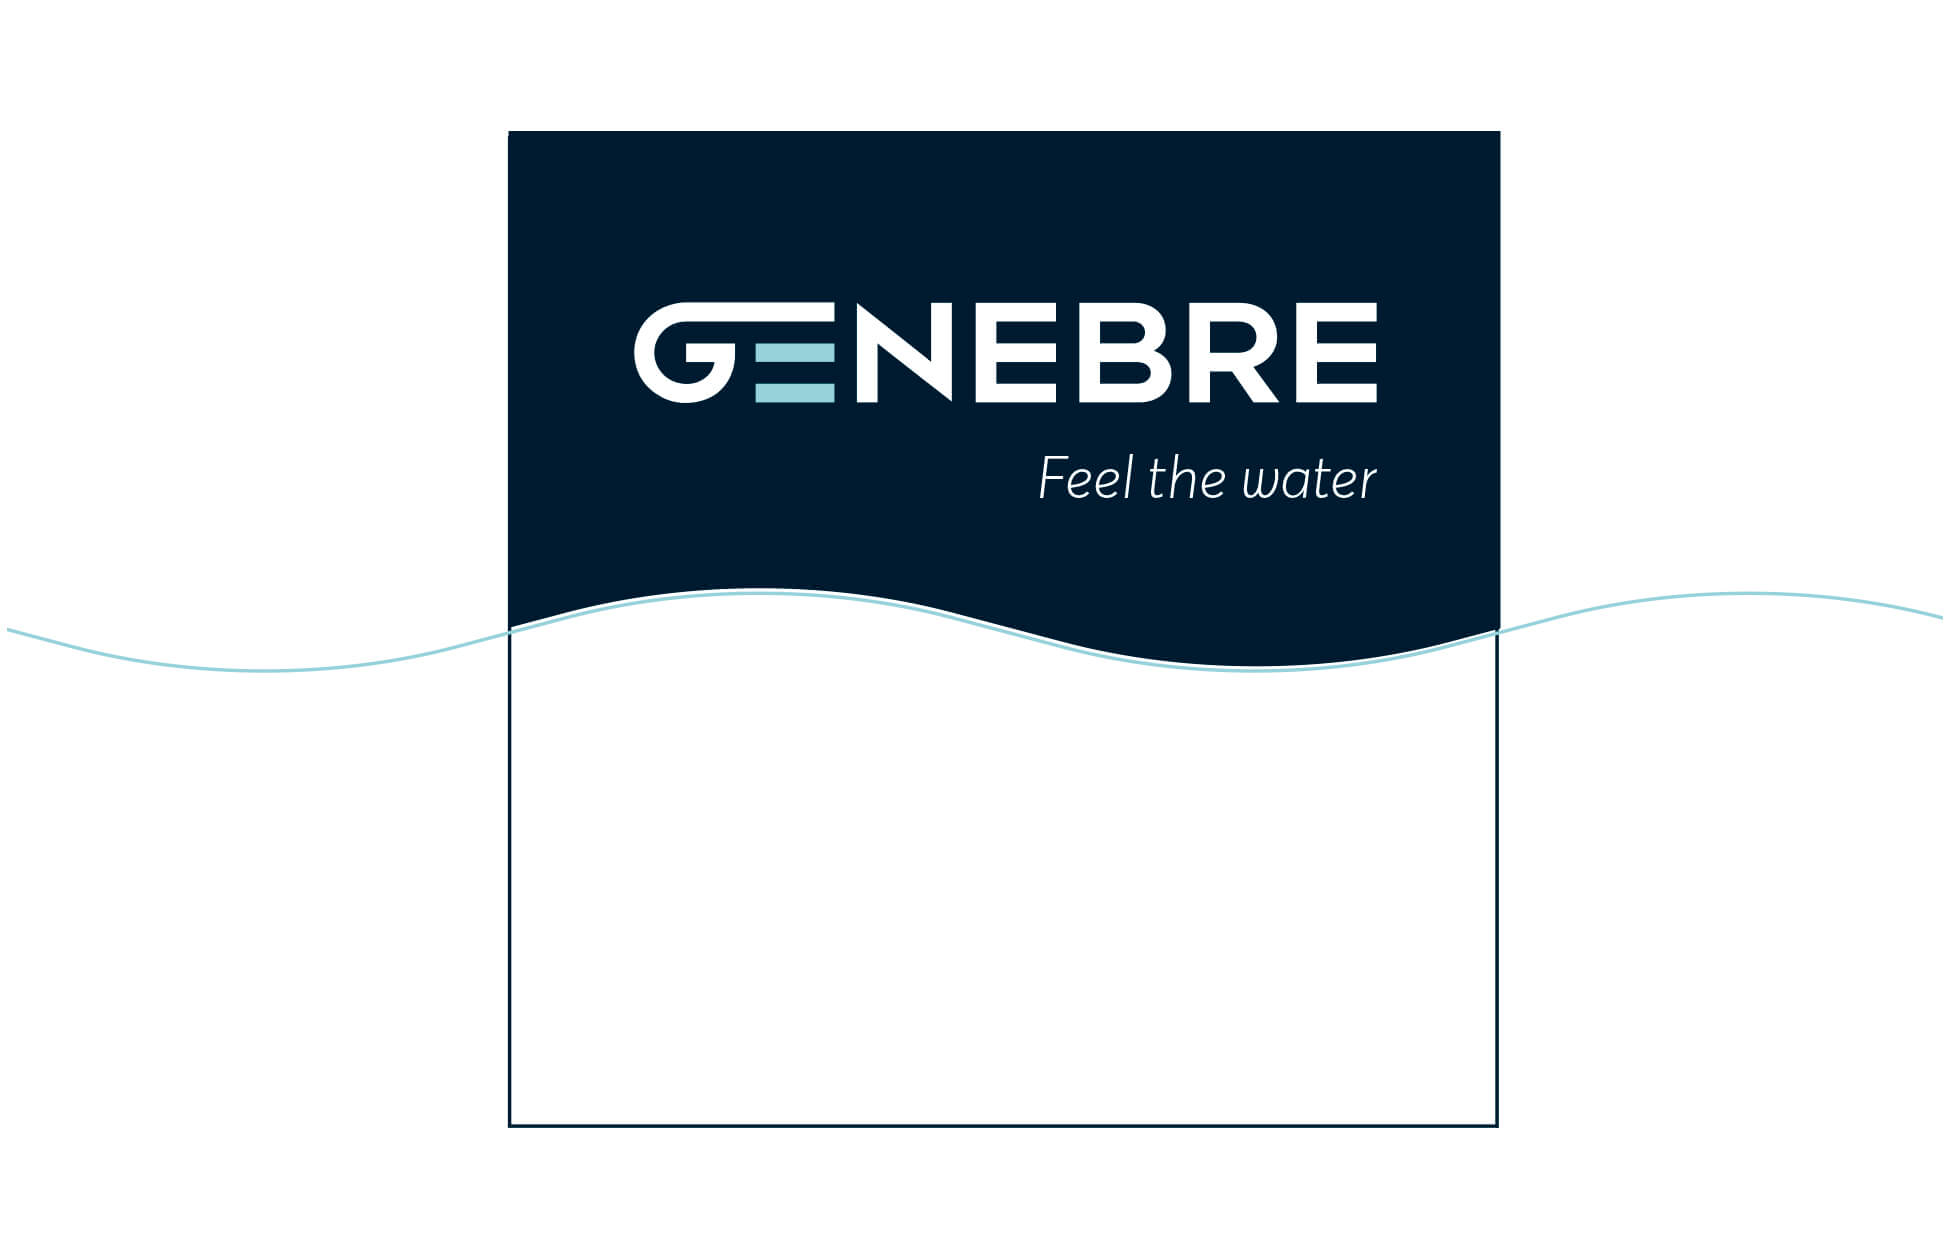 genebre feel the water